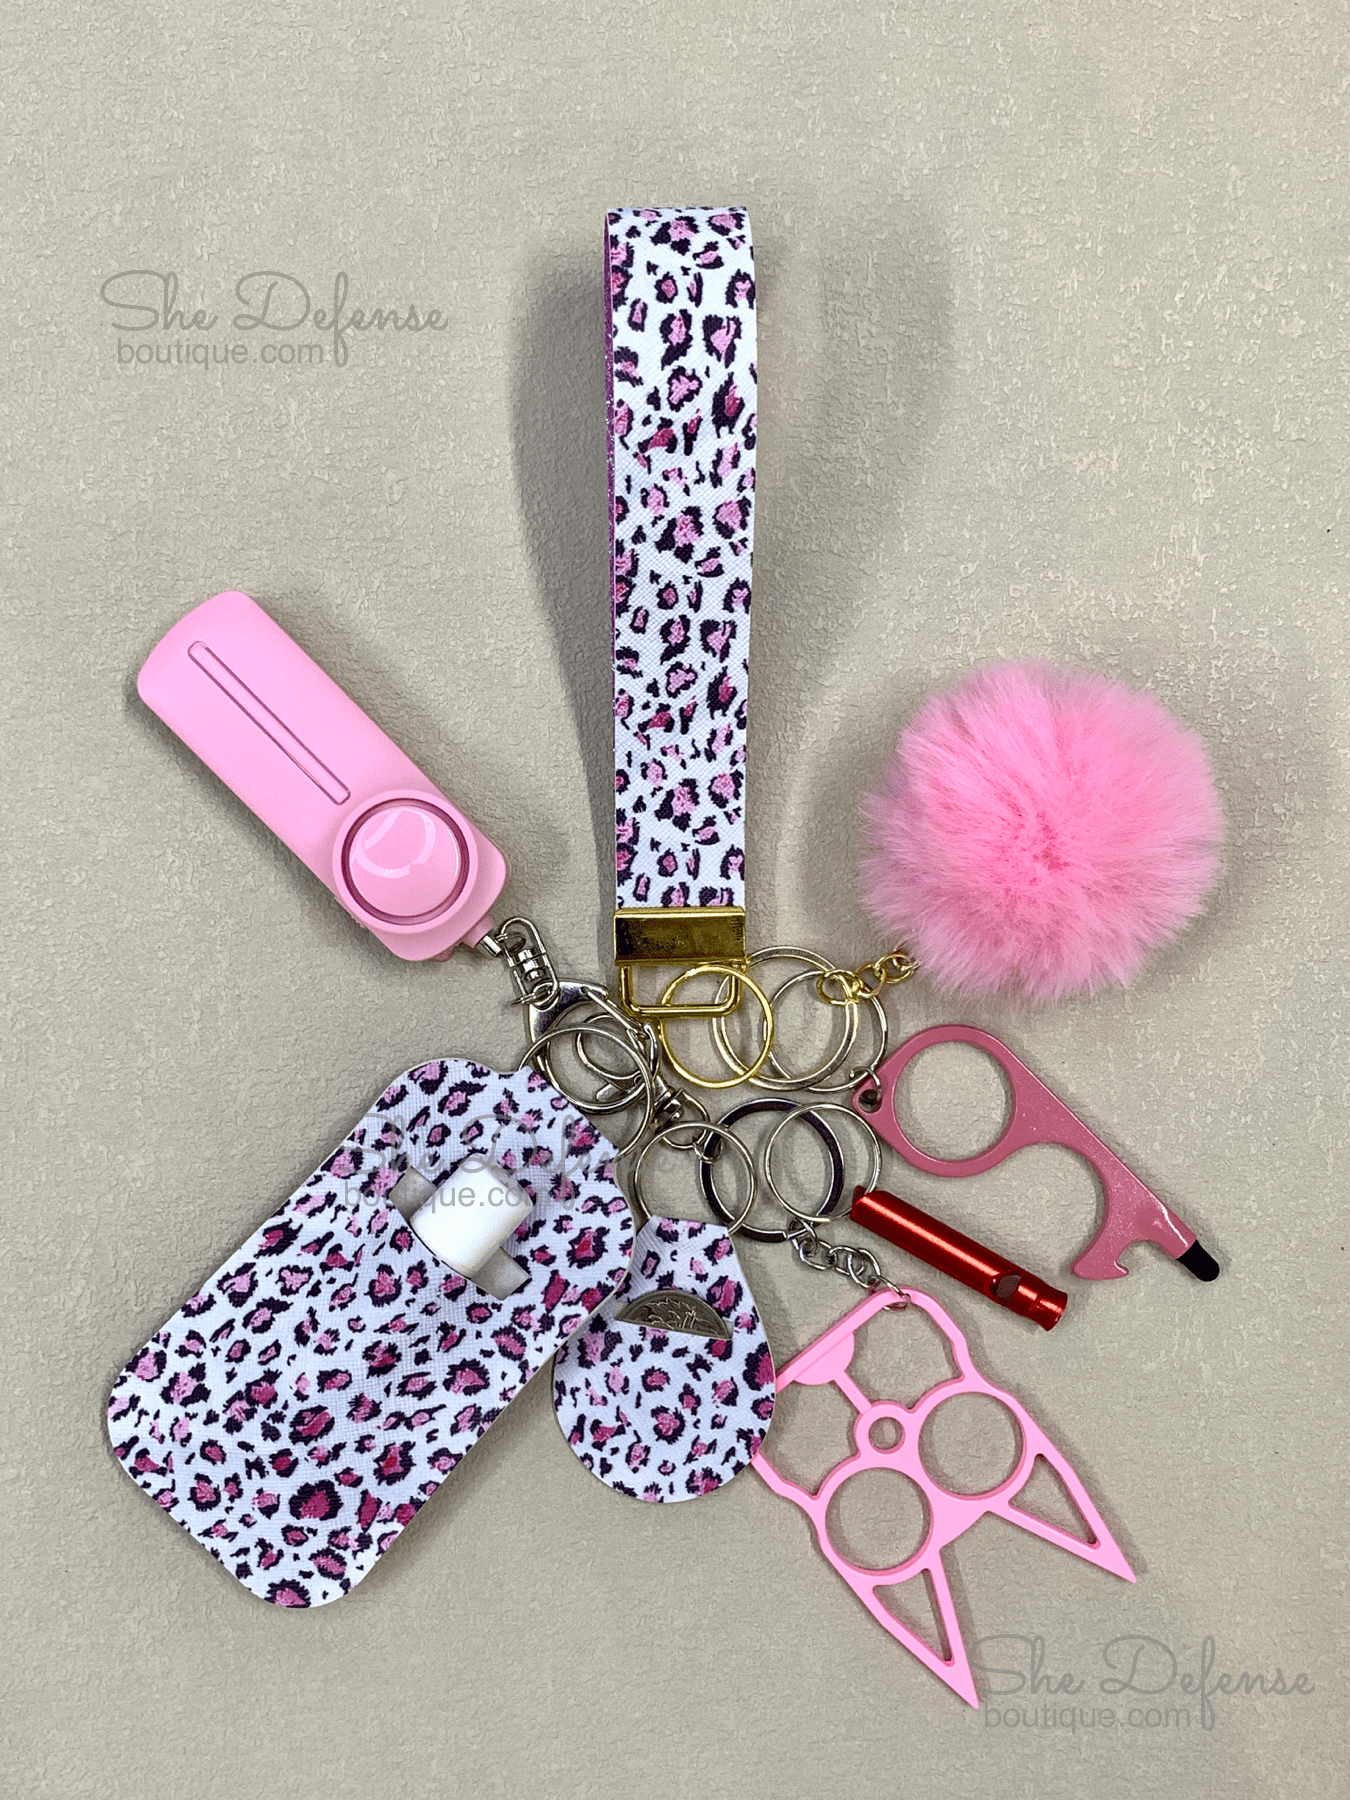 Mini Pink Leopard Glitter Faux Leather Self Defense Keychain Set-She Defense Boutique